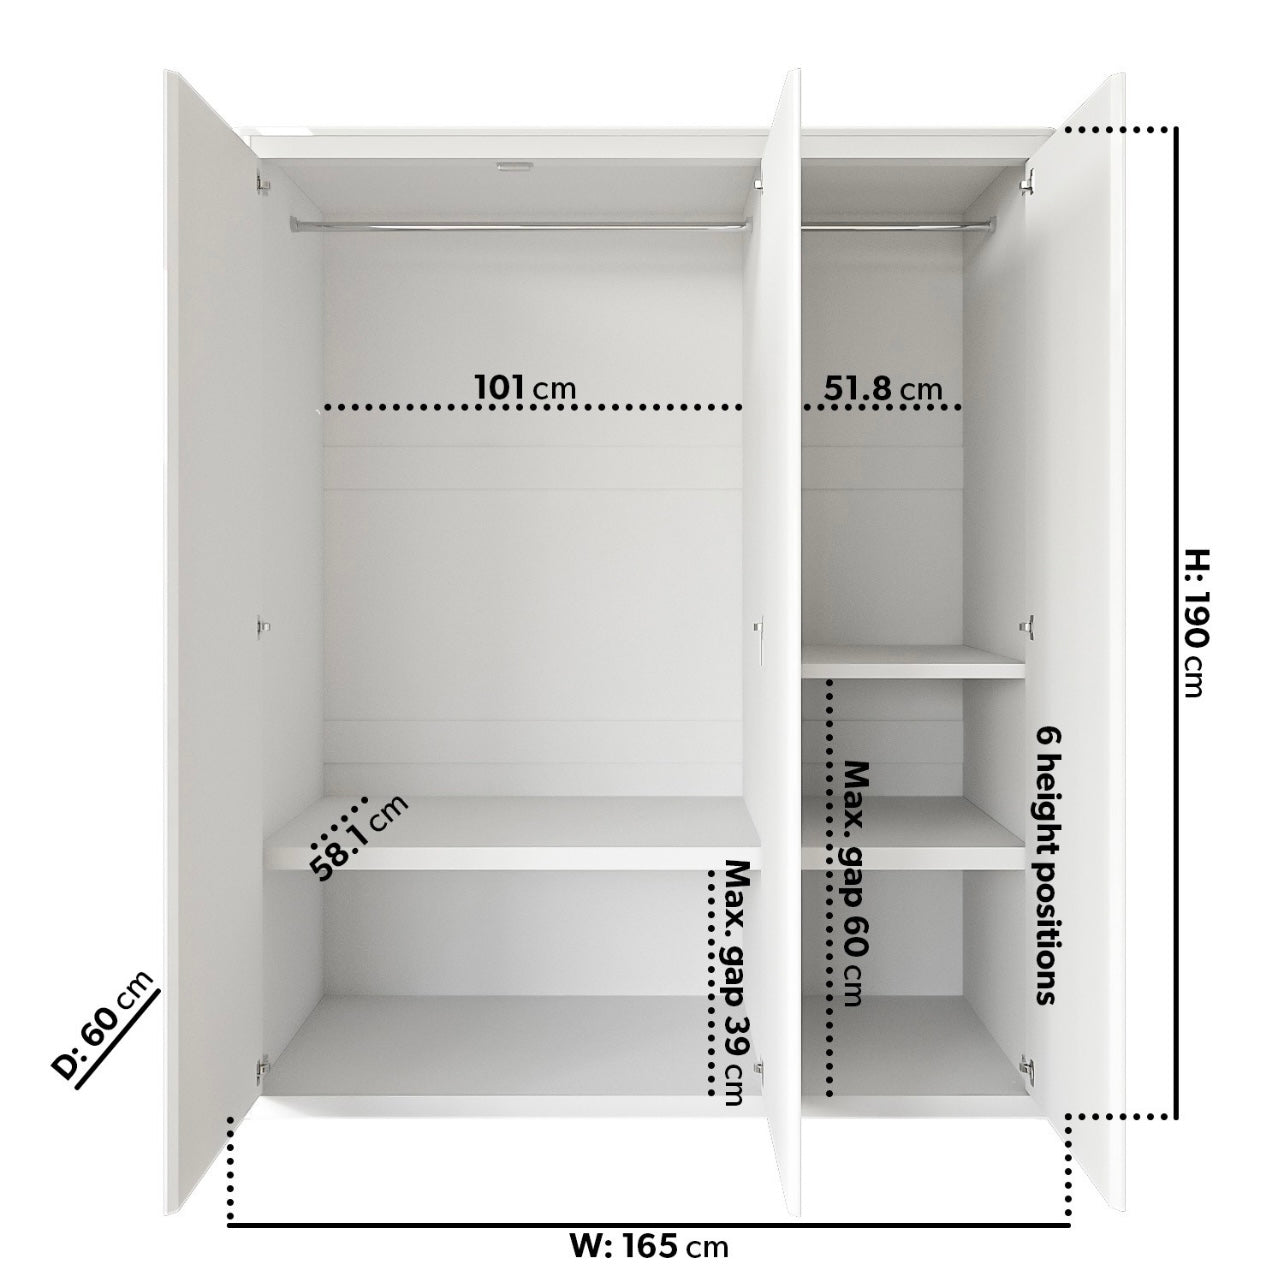 Triple Wardrobe with Adjustable Shelves